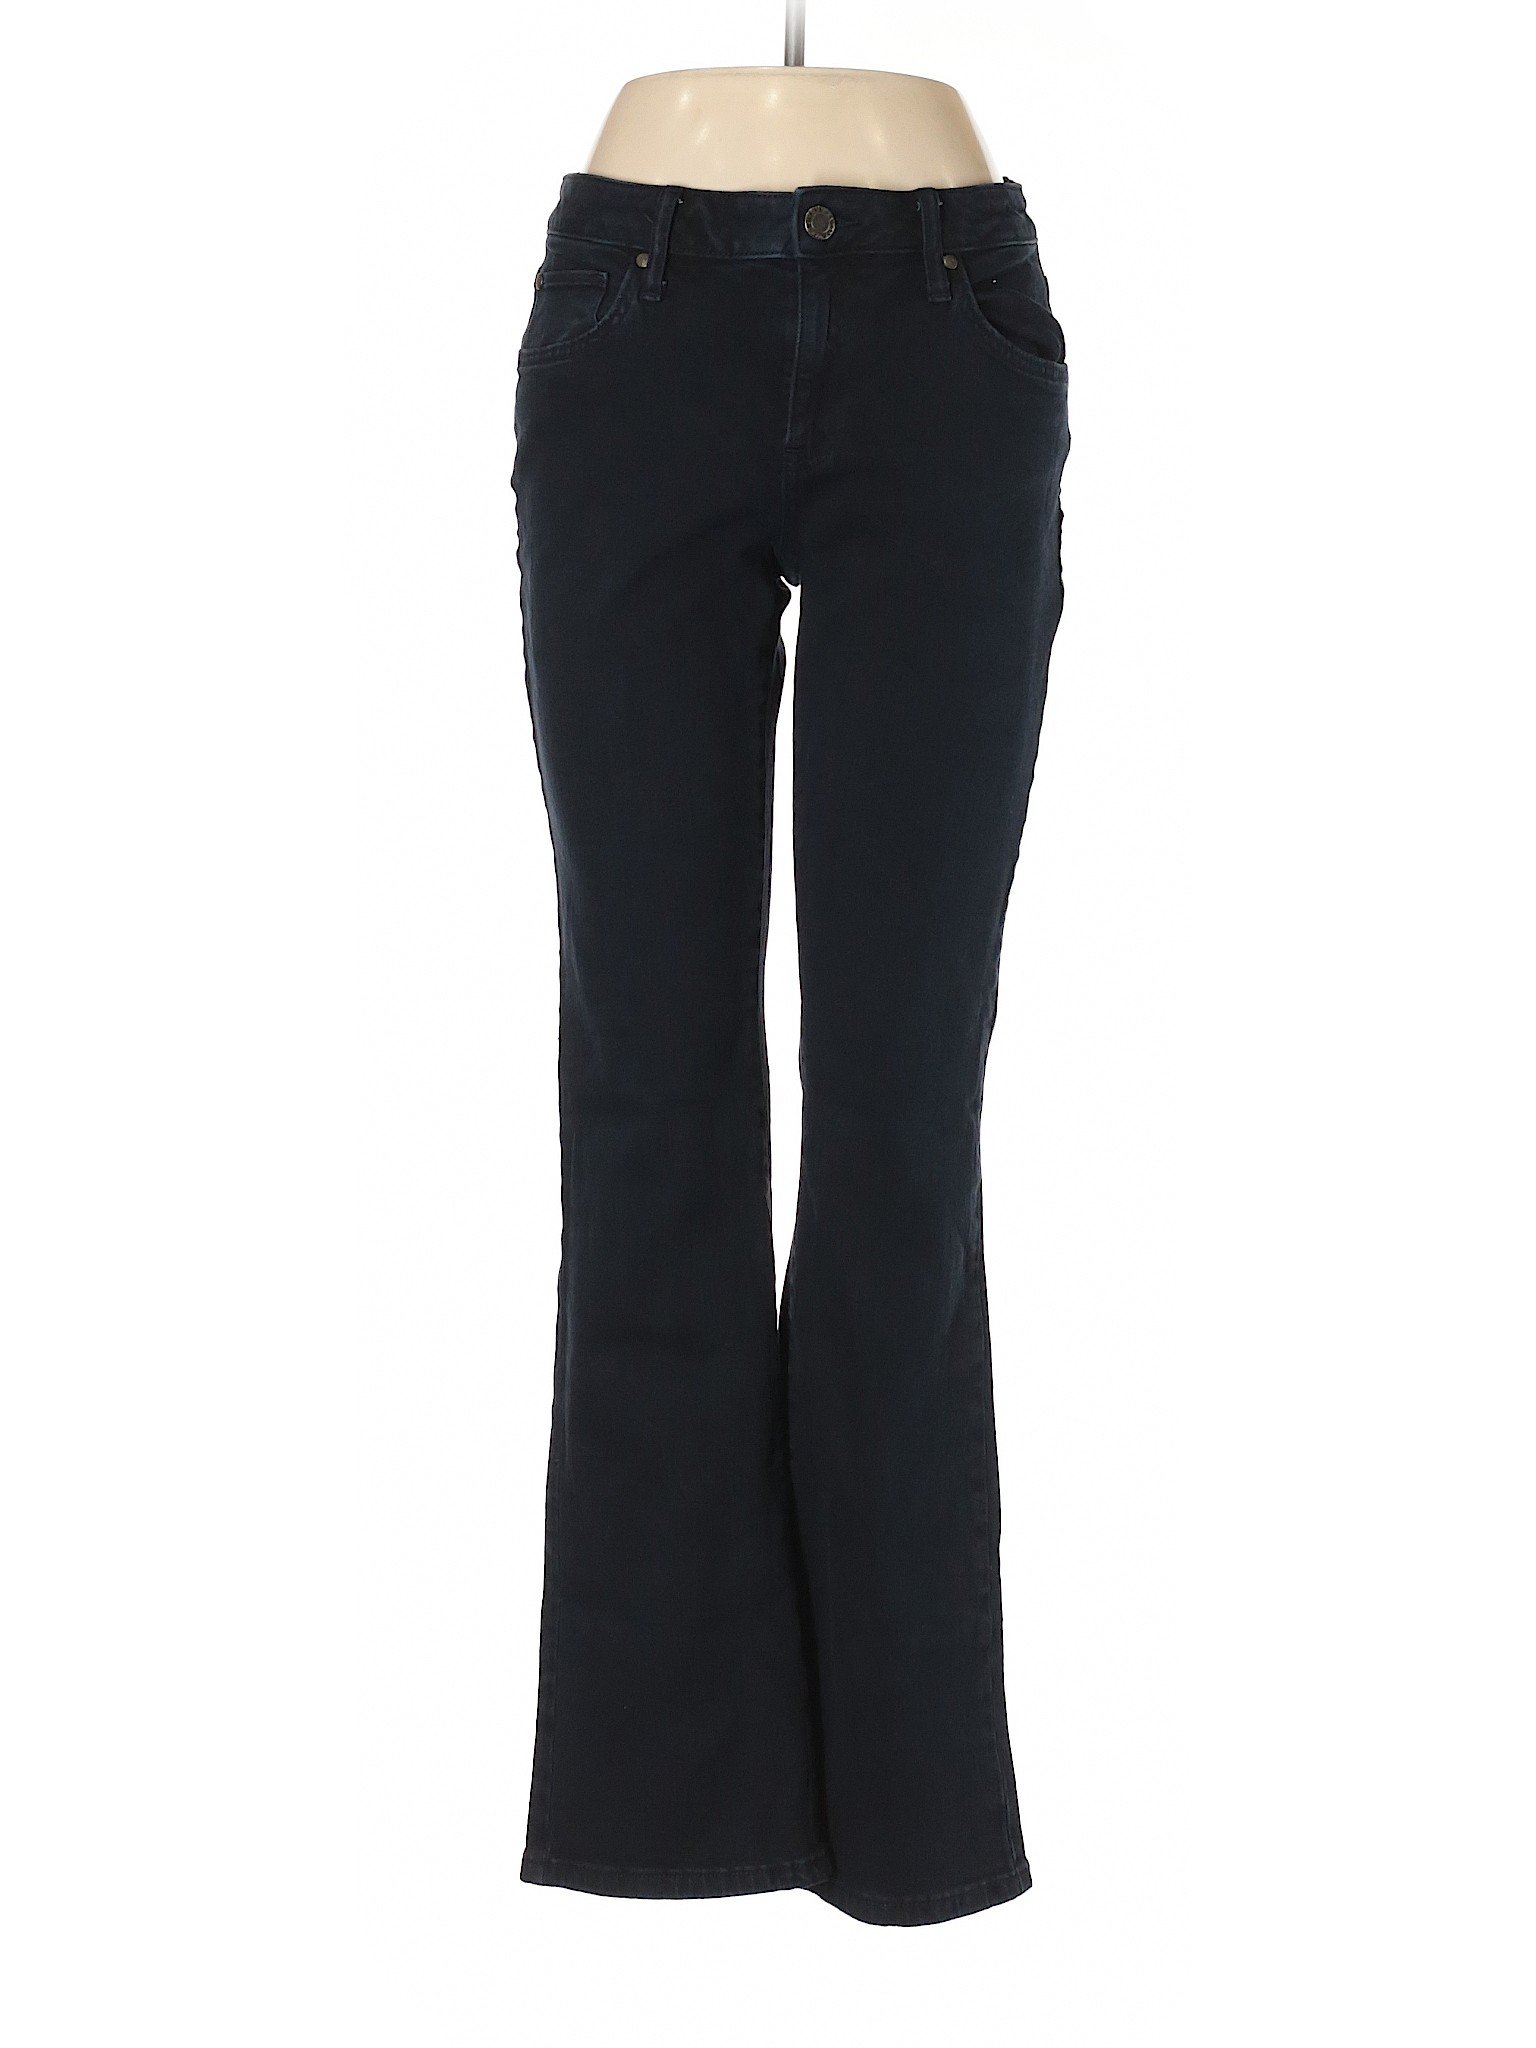 Simply Vera Vera Wang Women Black Jeans 8 | eBay